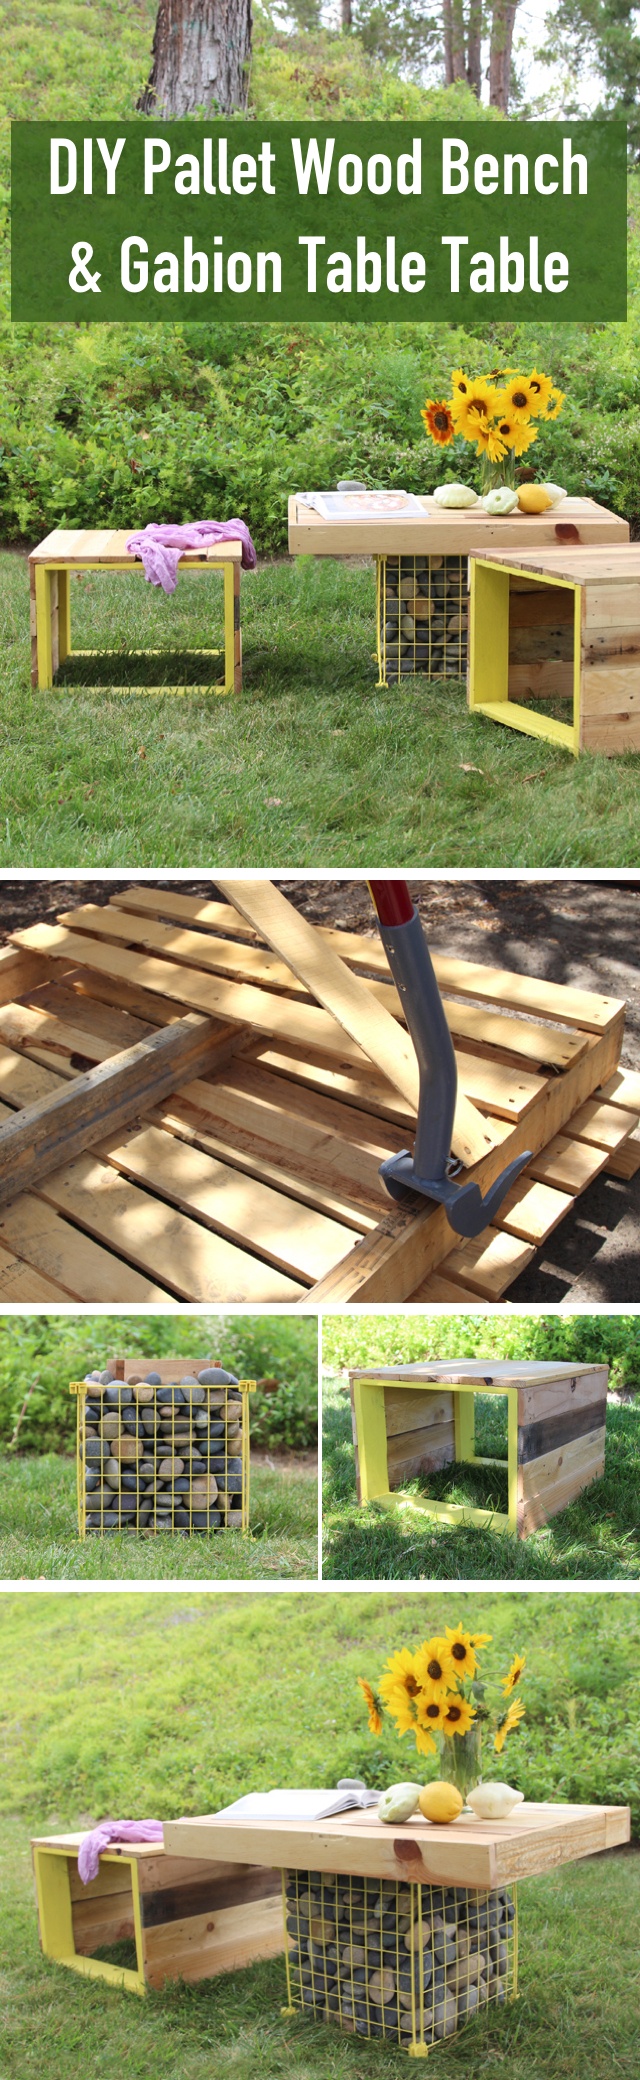 DIY Pallet Wood Bench Gabion Table